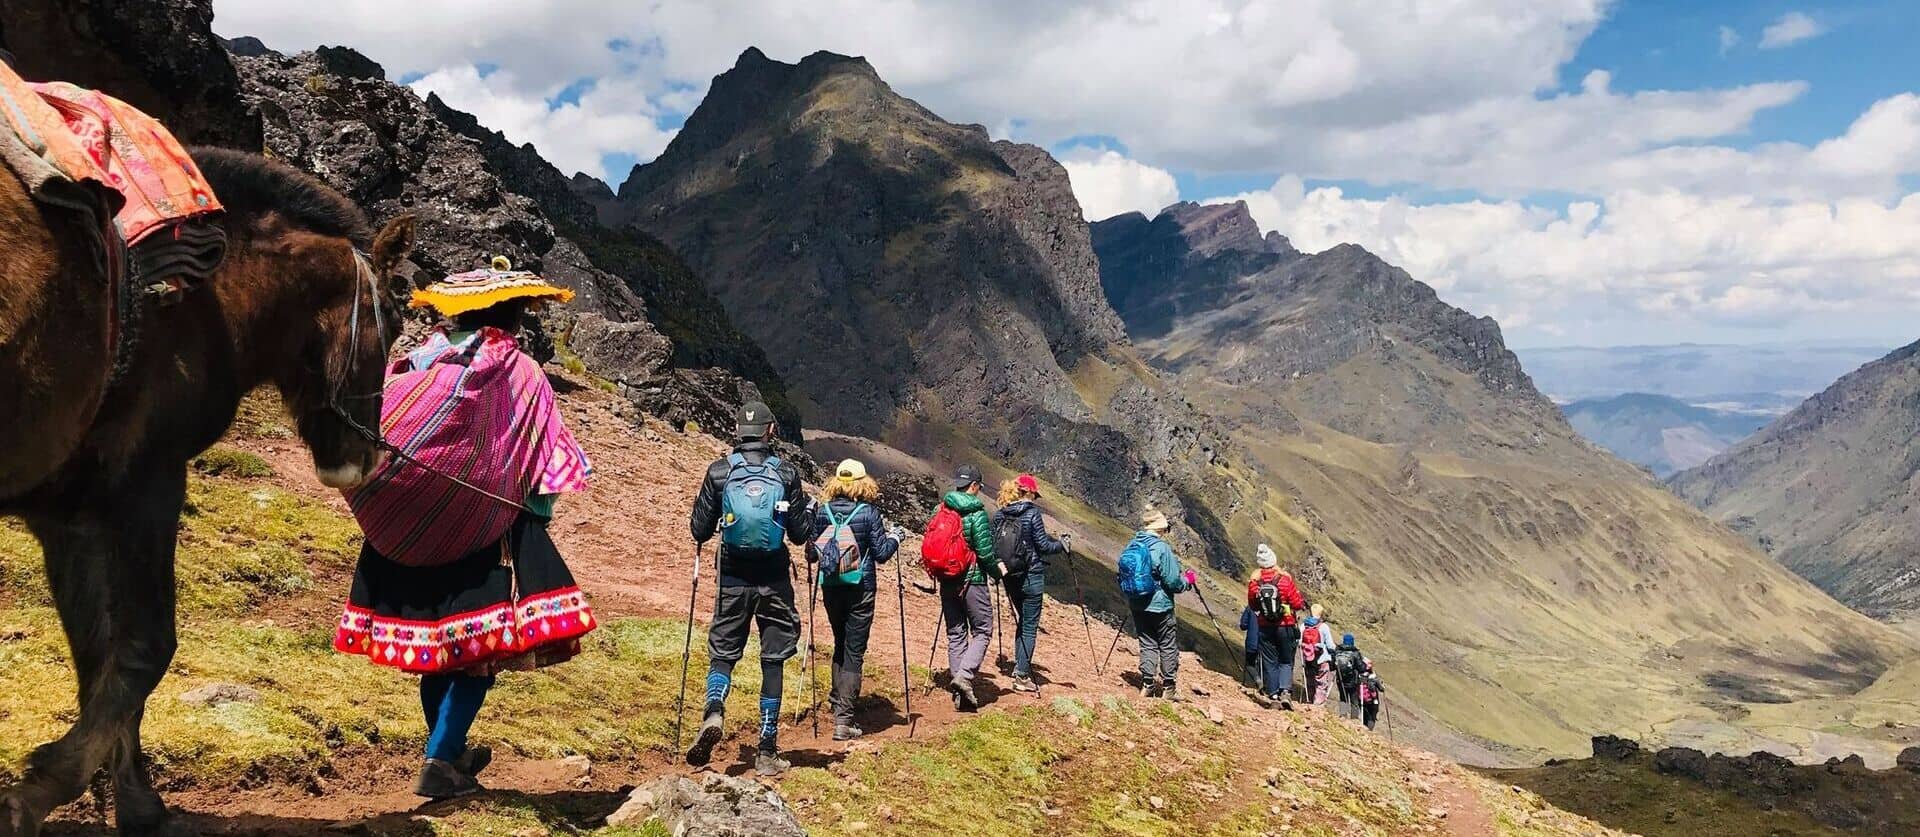 Hiking in Nature - Lares Trek to Machu Picchu